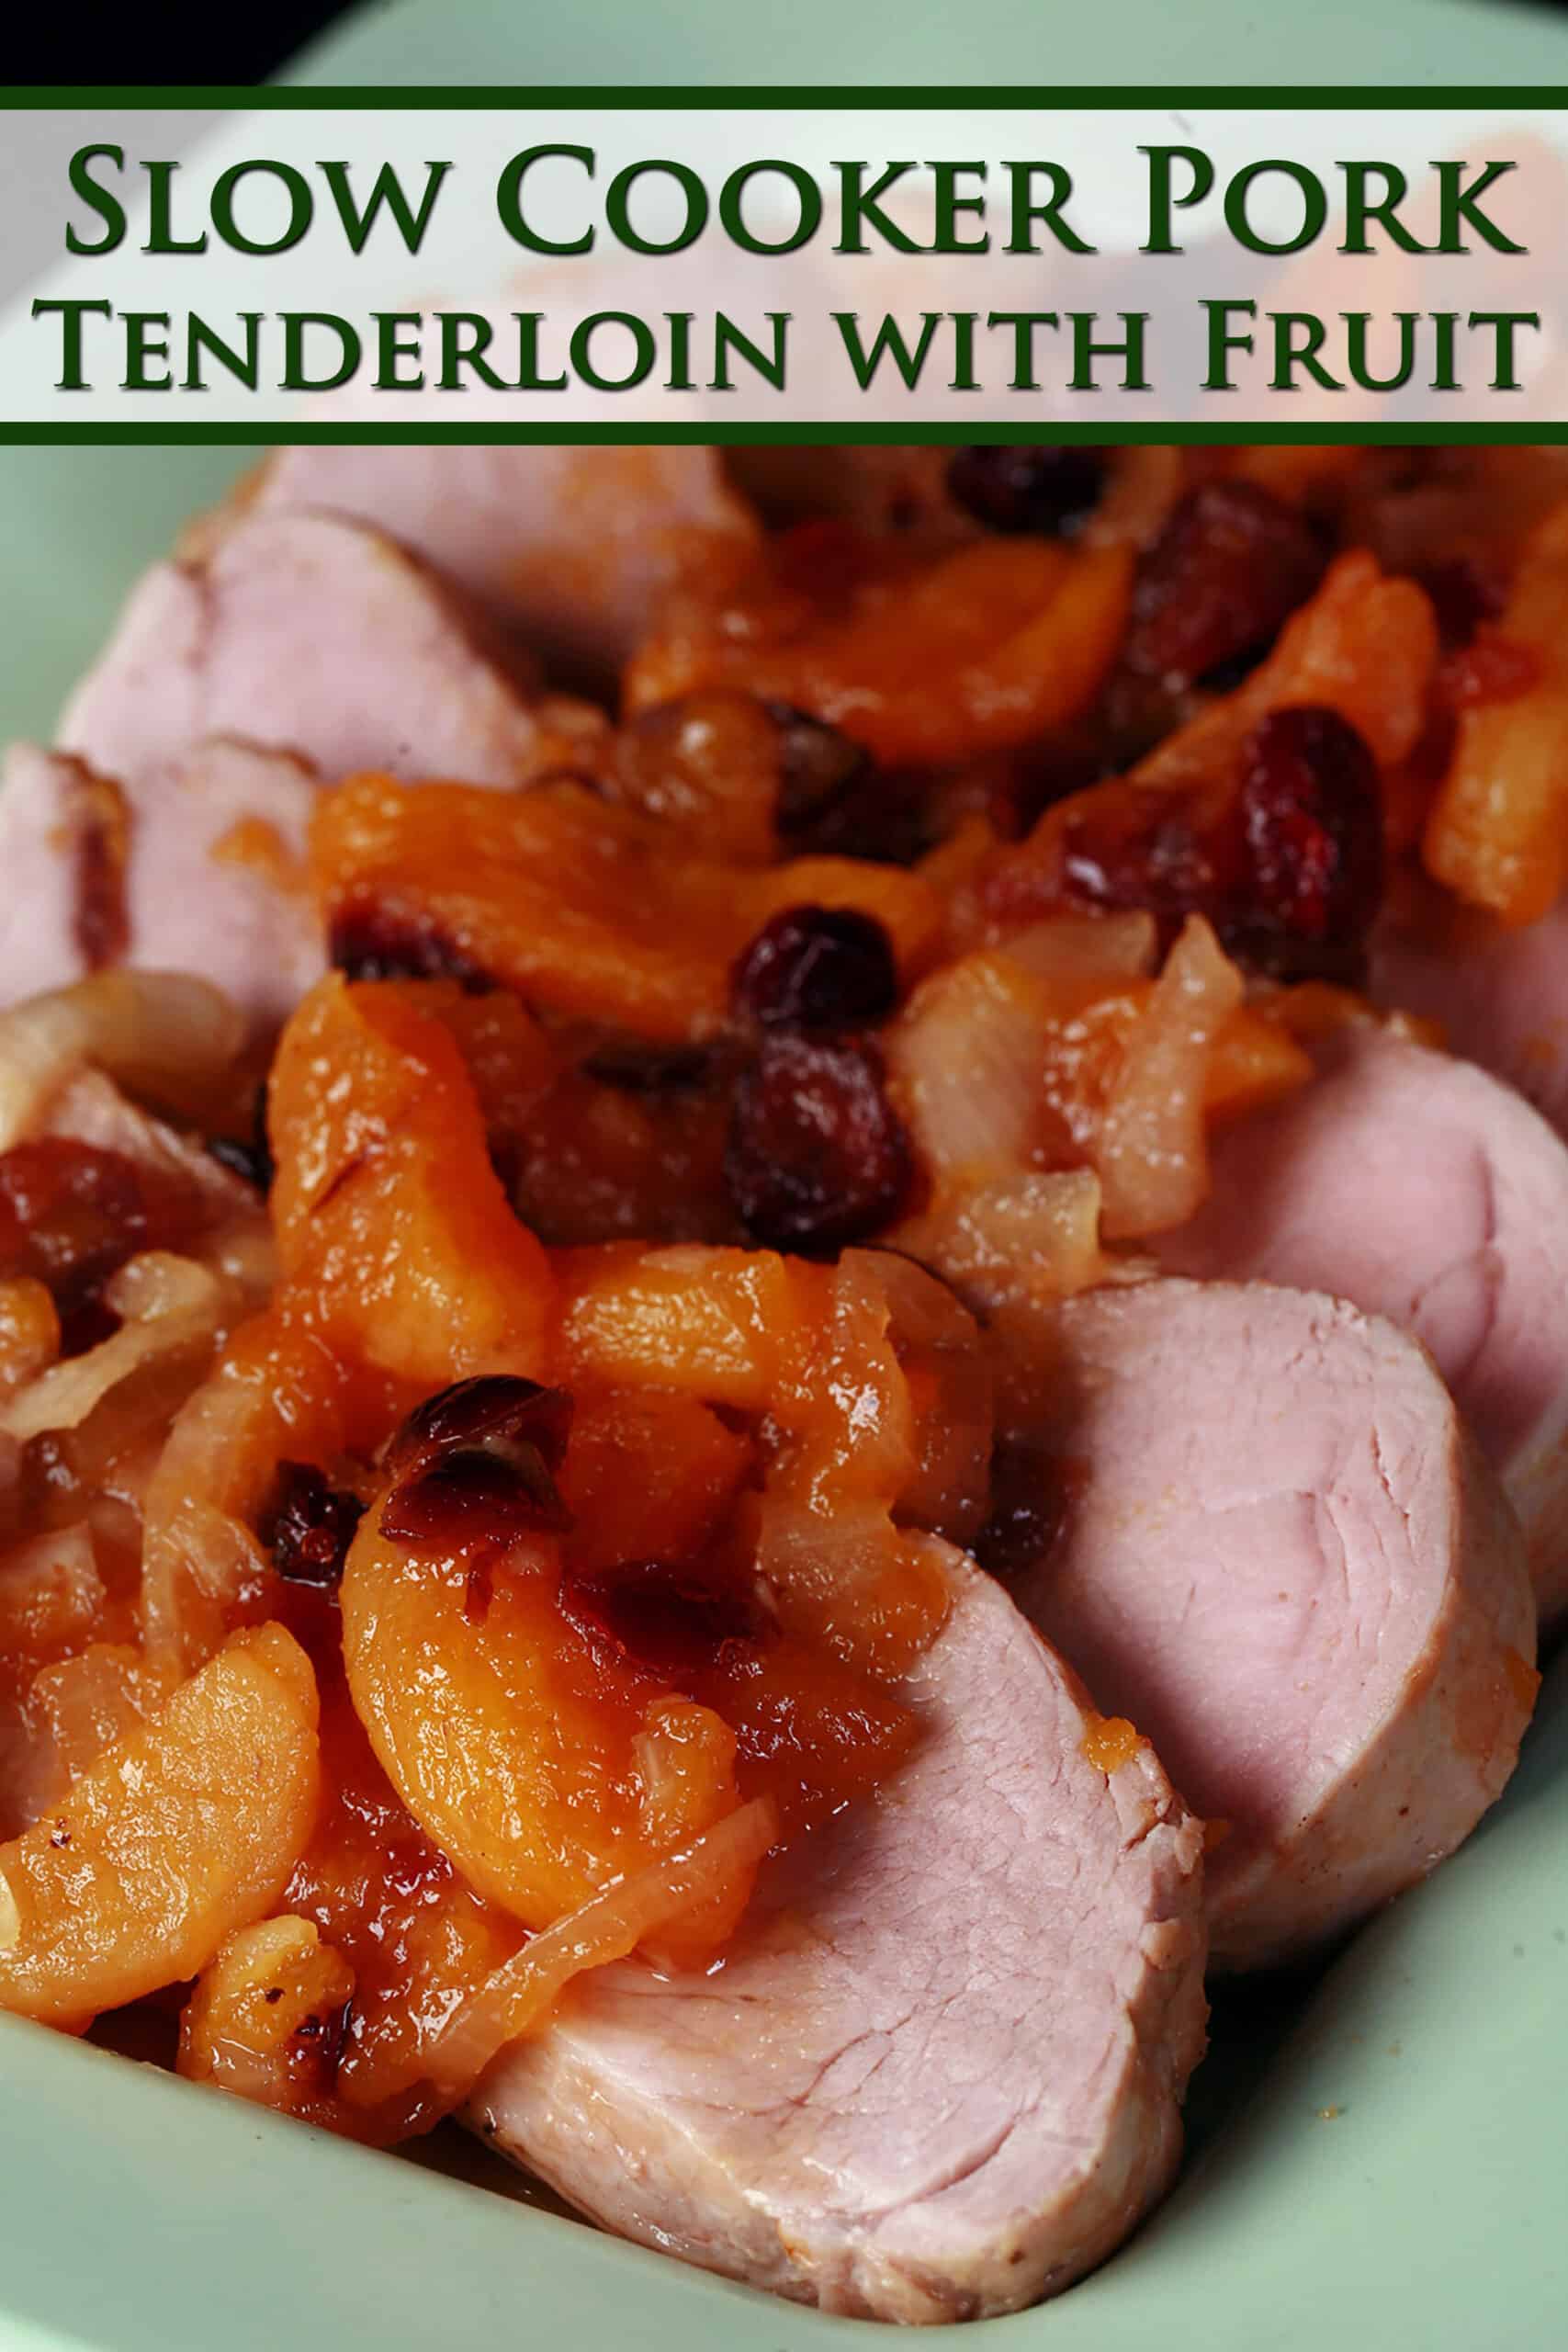 Slices of pork tenderloin with stewed fruit on top.  Overlaid text says slow cooker pork tenderloin with fruit.